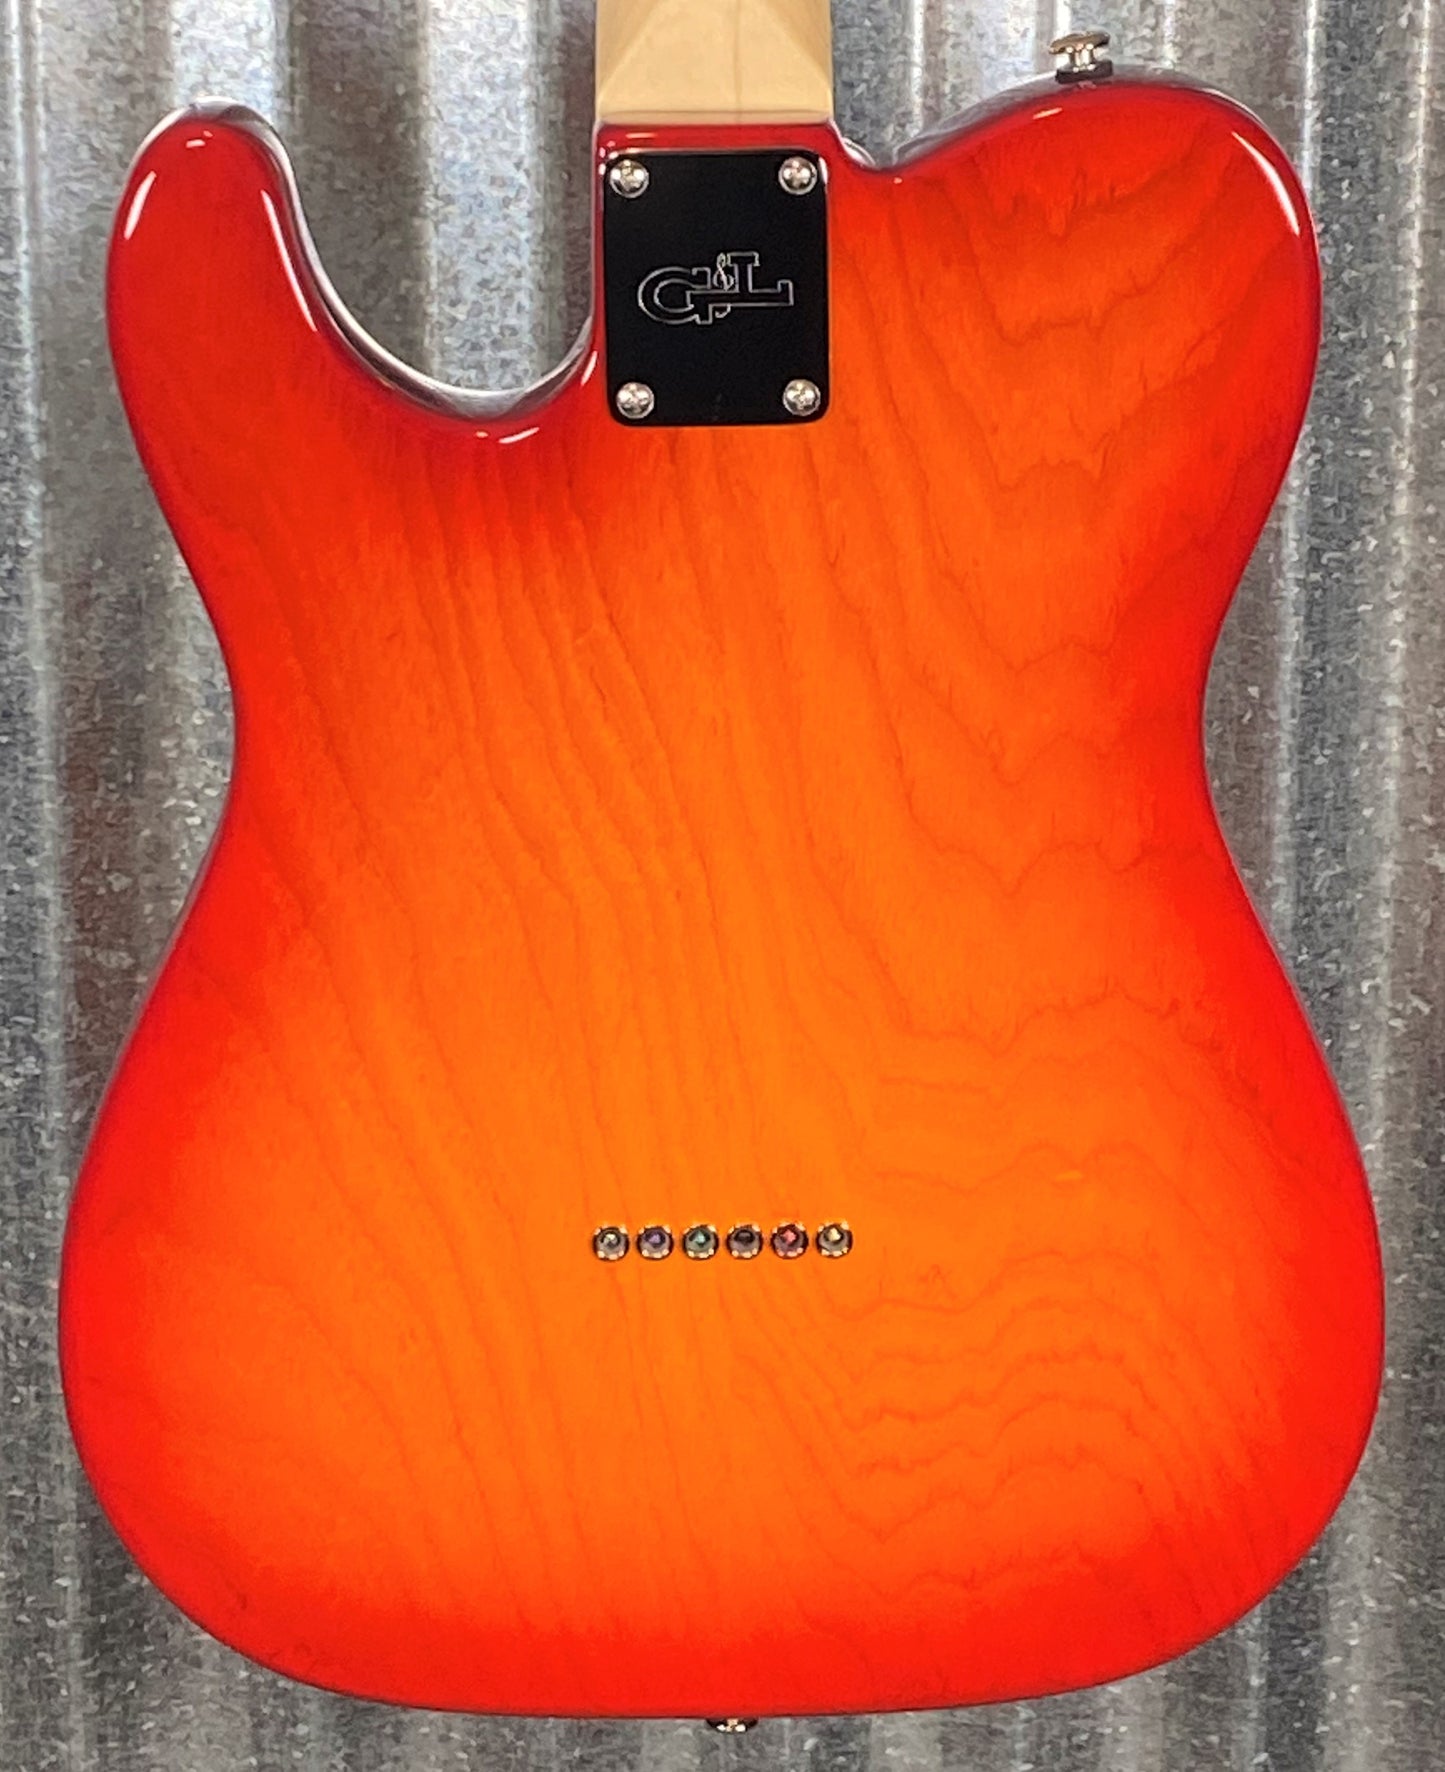 G&L USA ASAT Classic S Cherryburst Guitar & Case #7171